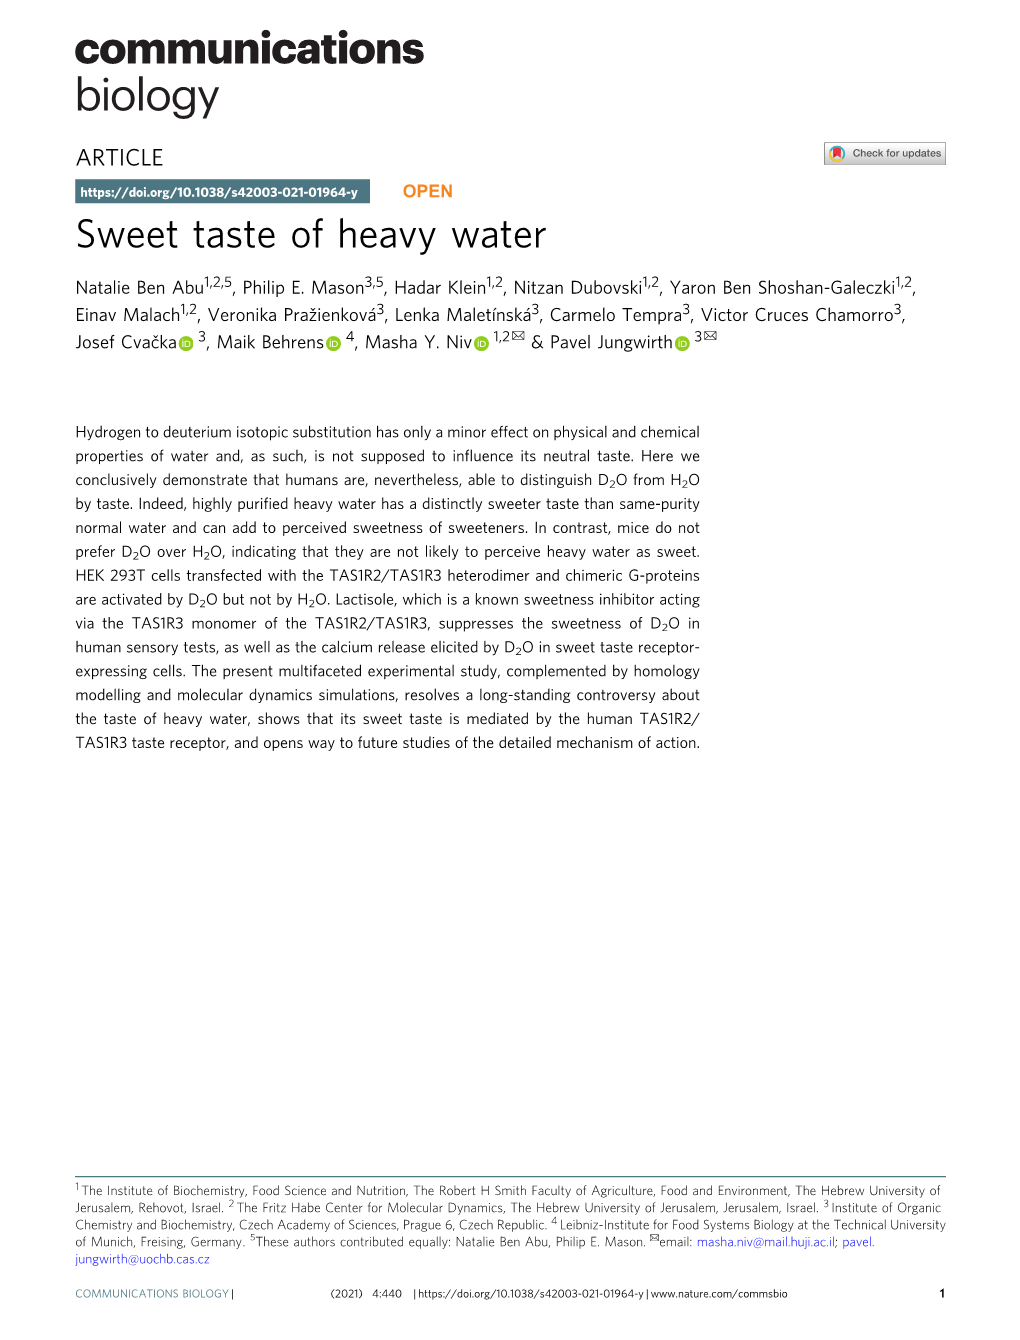 Sweet Taste of Heavy Water